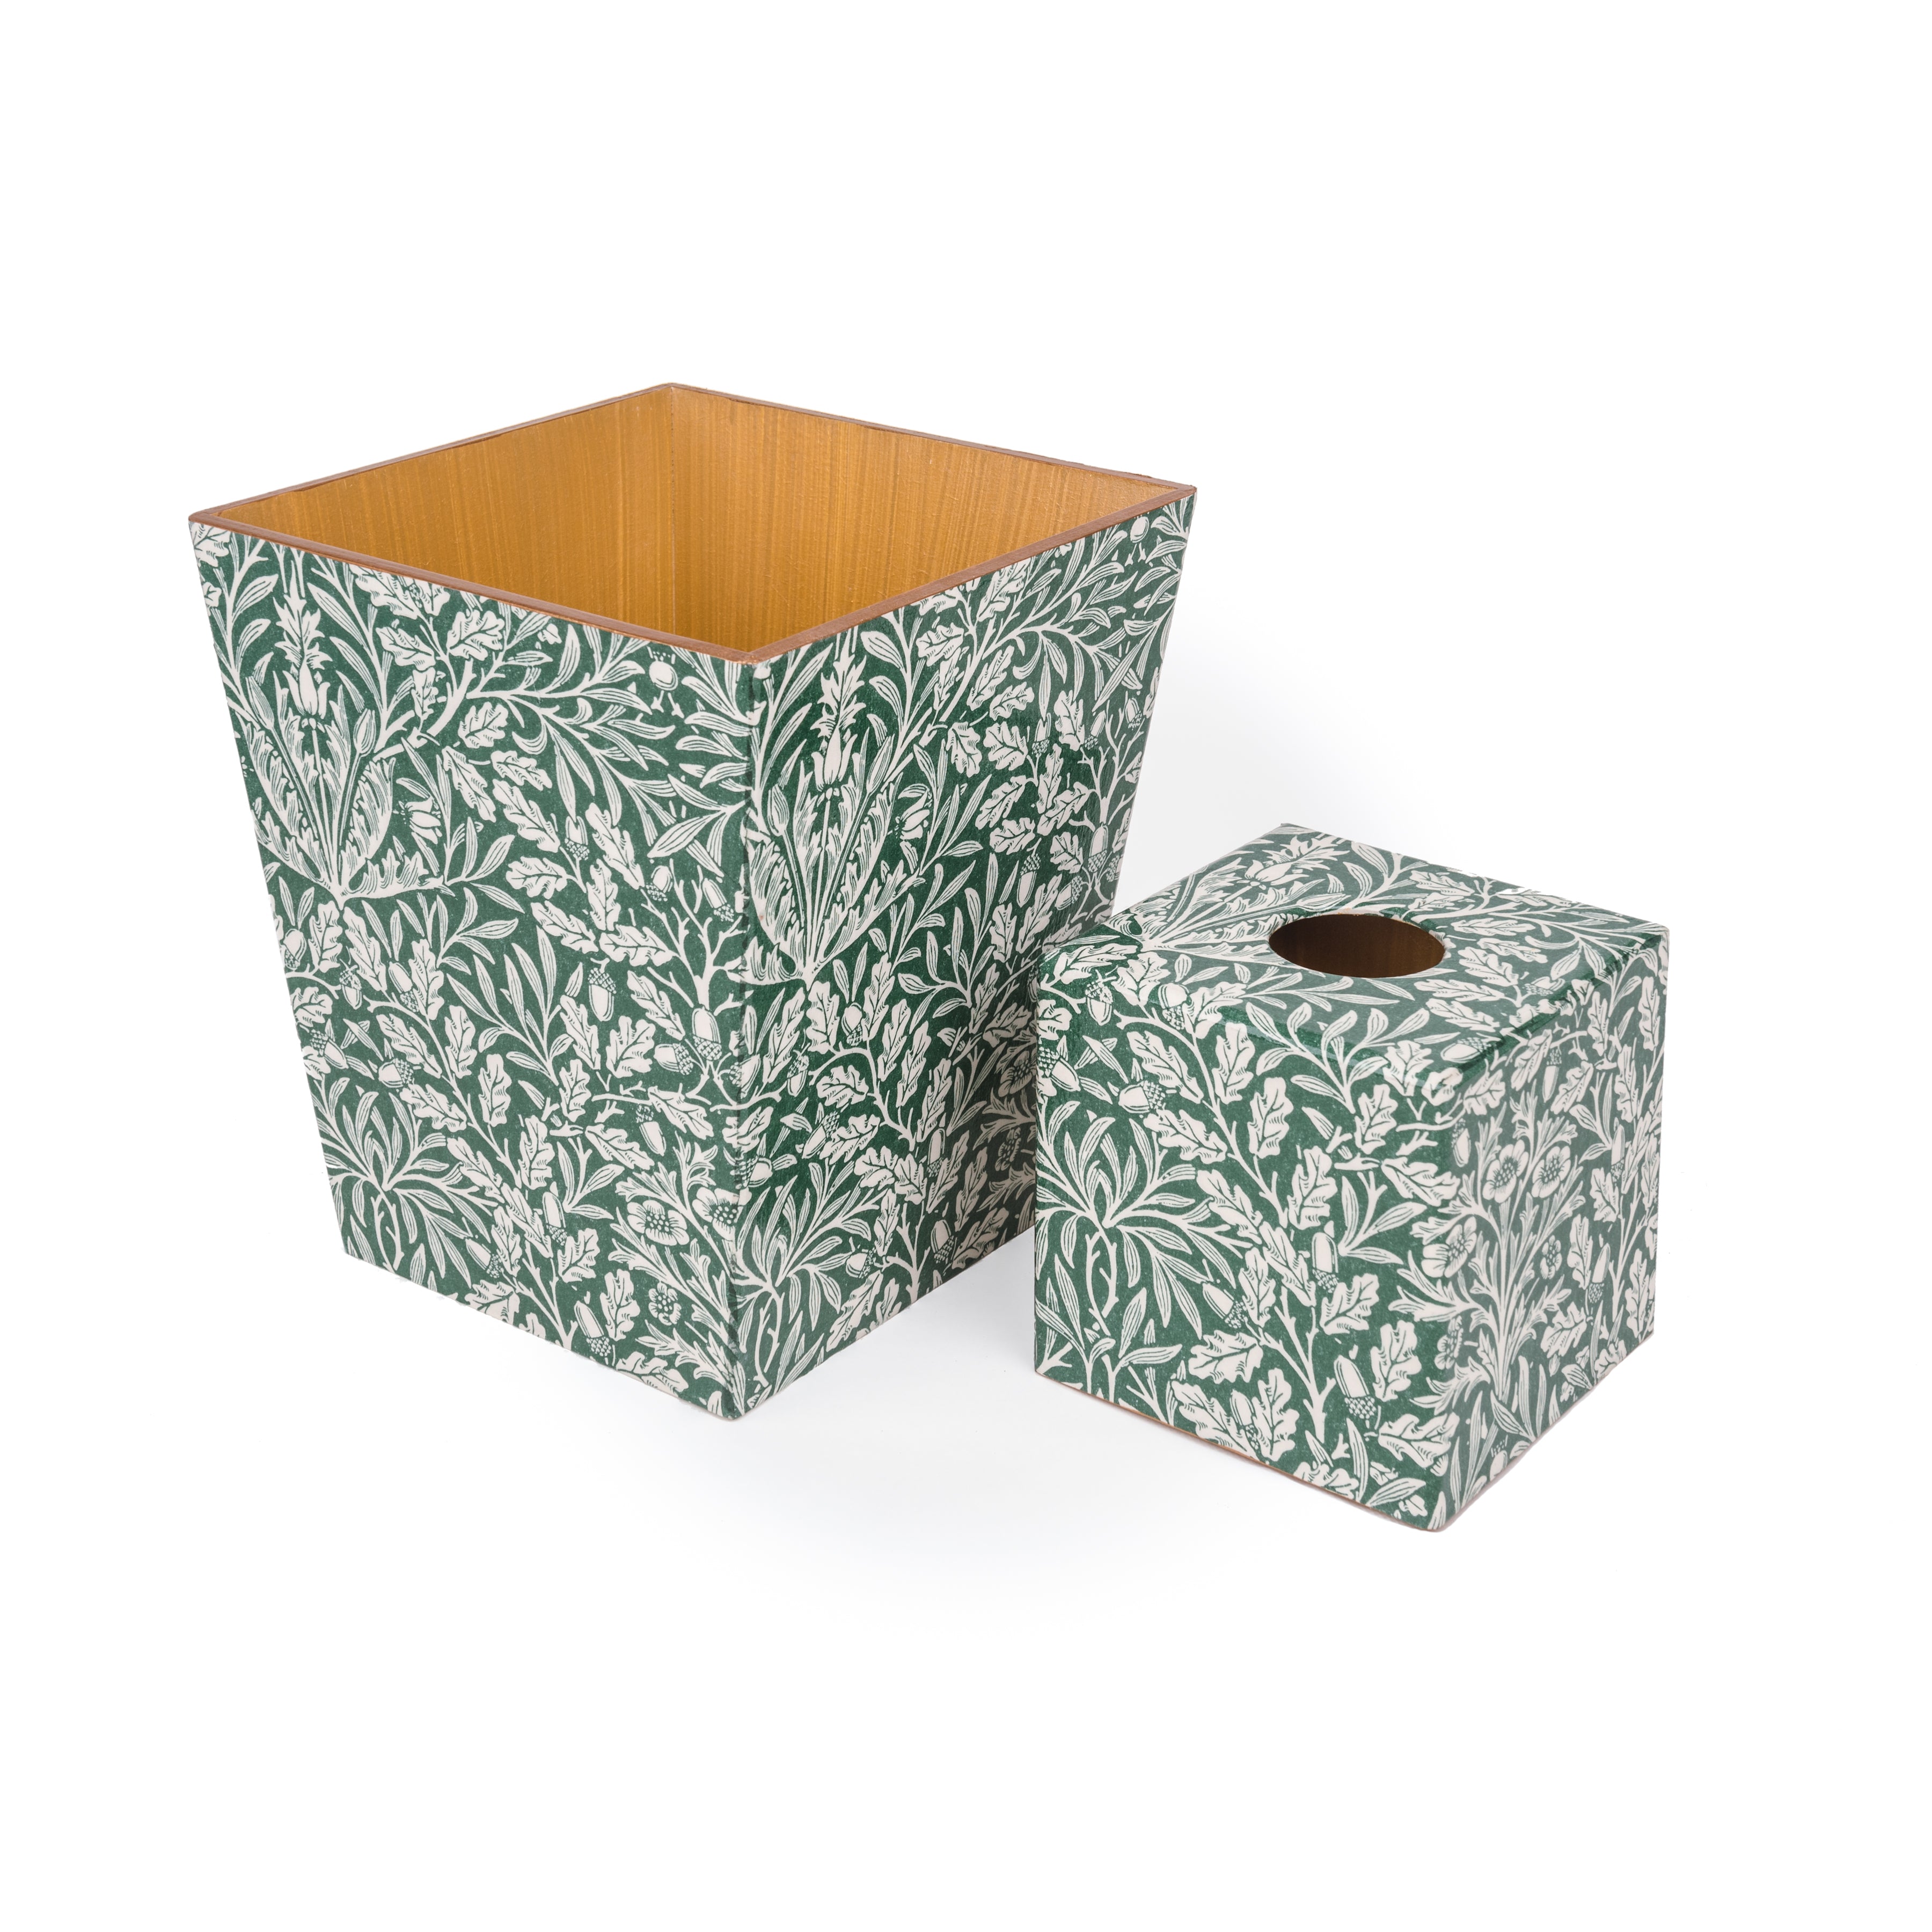 Green Acorn Tissue Box Cover - Handmade